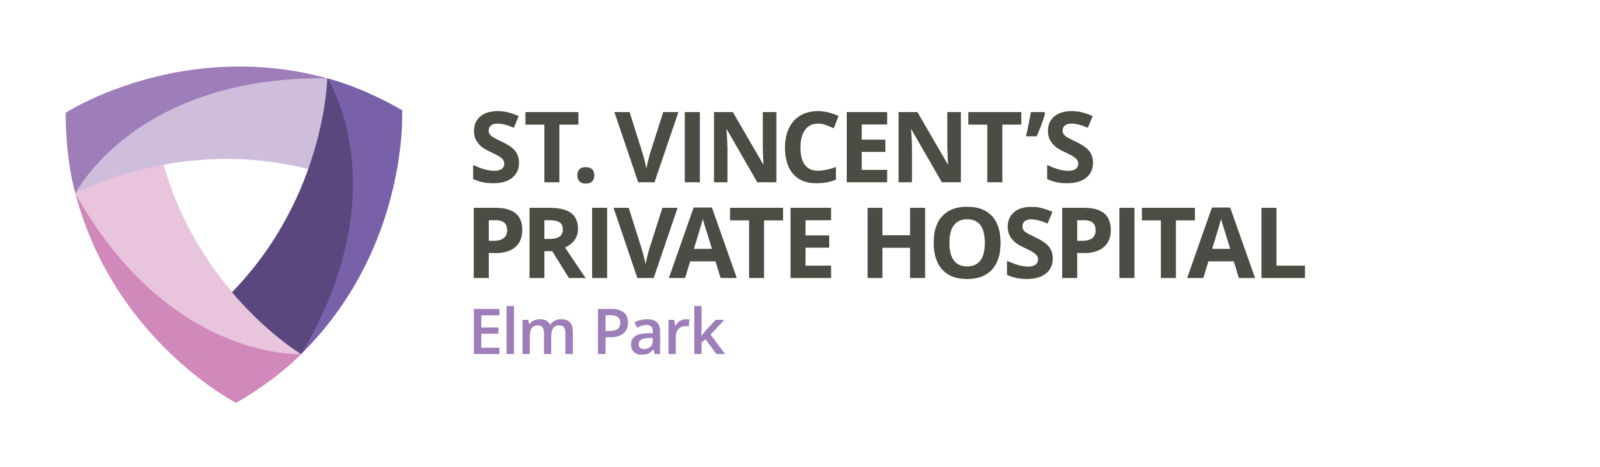 St. Vincent’s Private Hospital